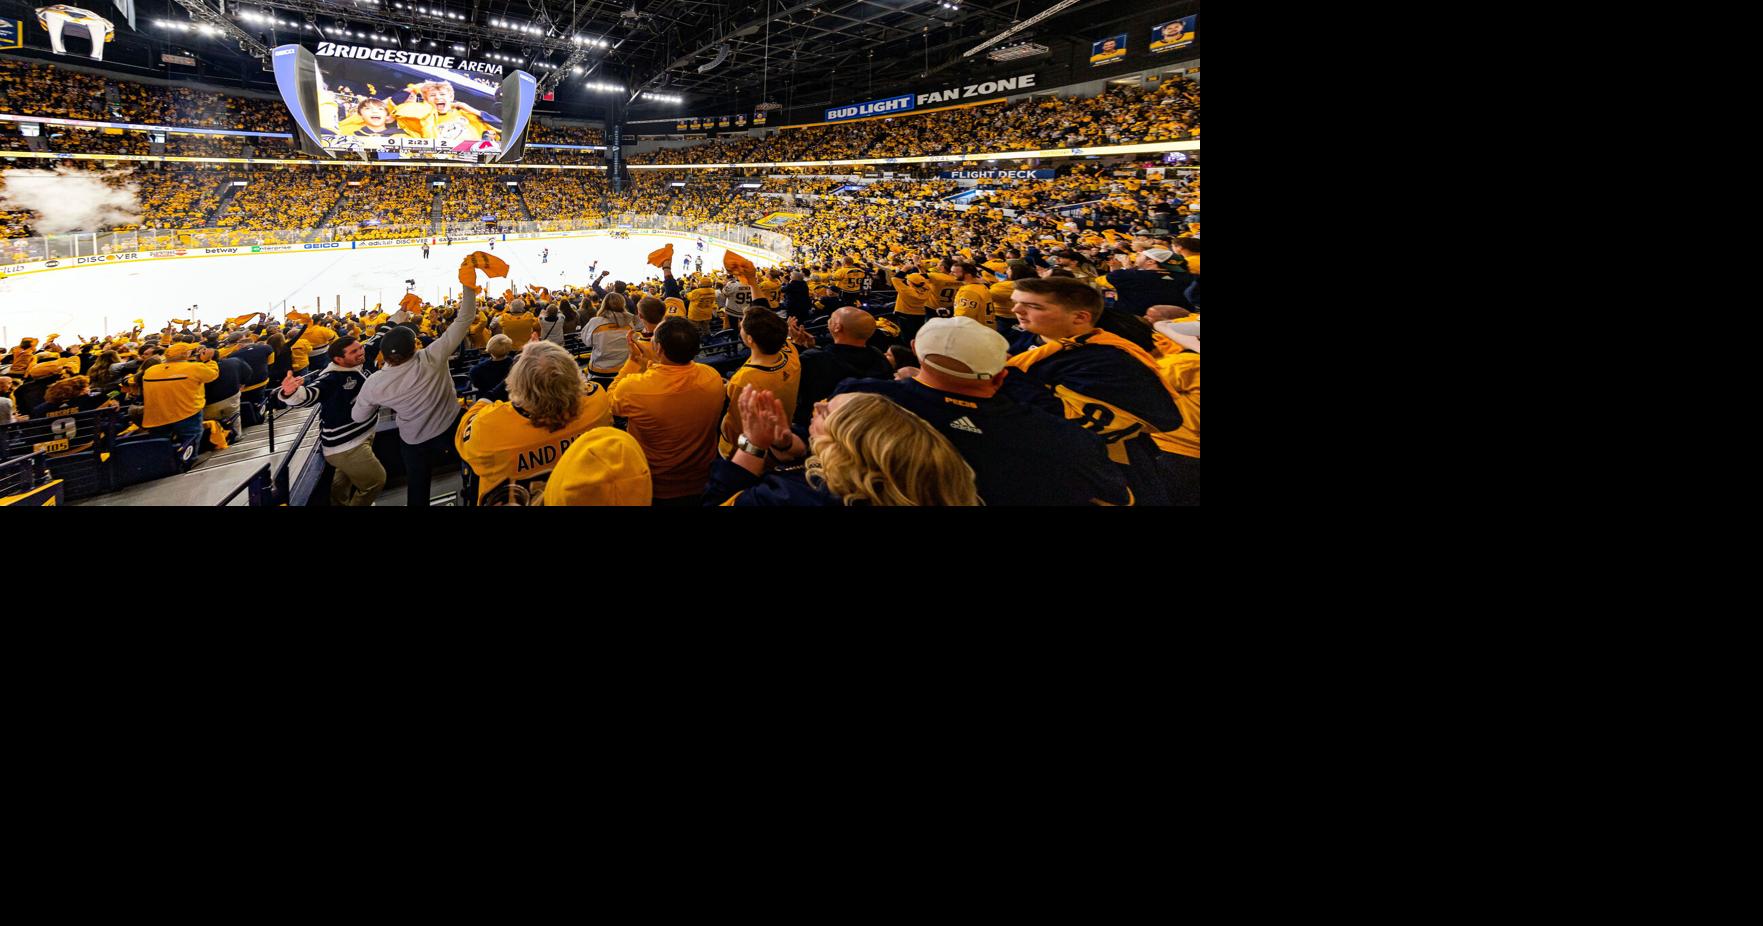 2022 NHL Stadium Series Panoramic Picture - Nashville Predators